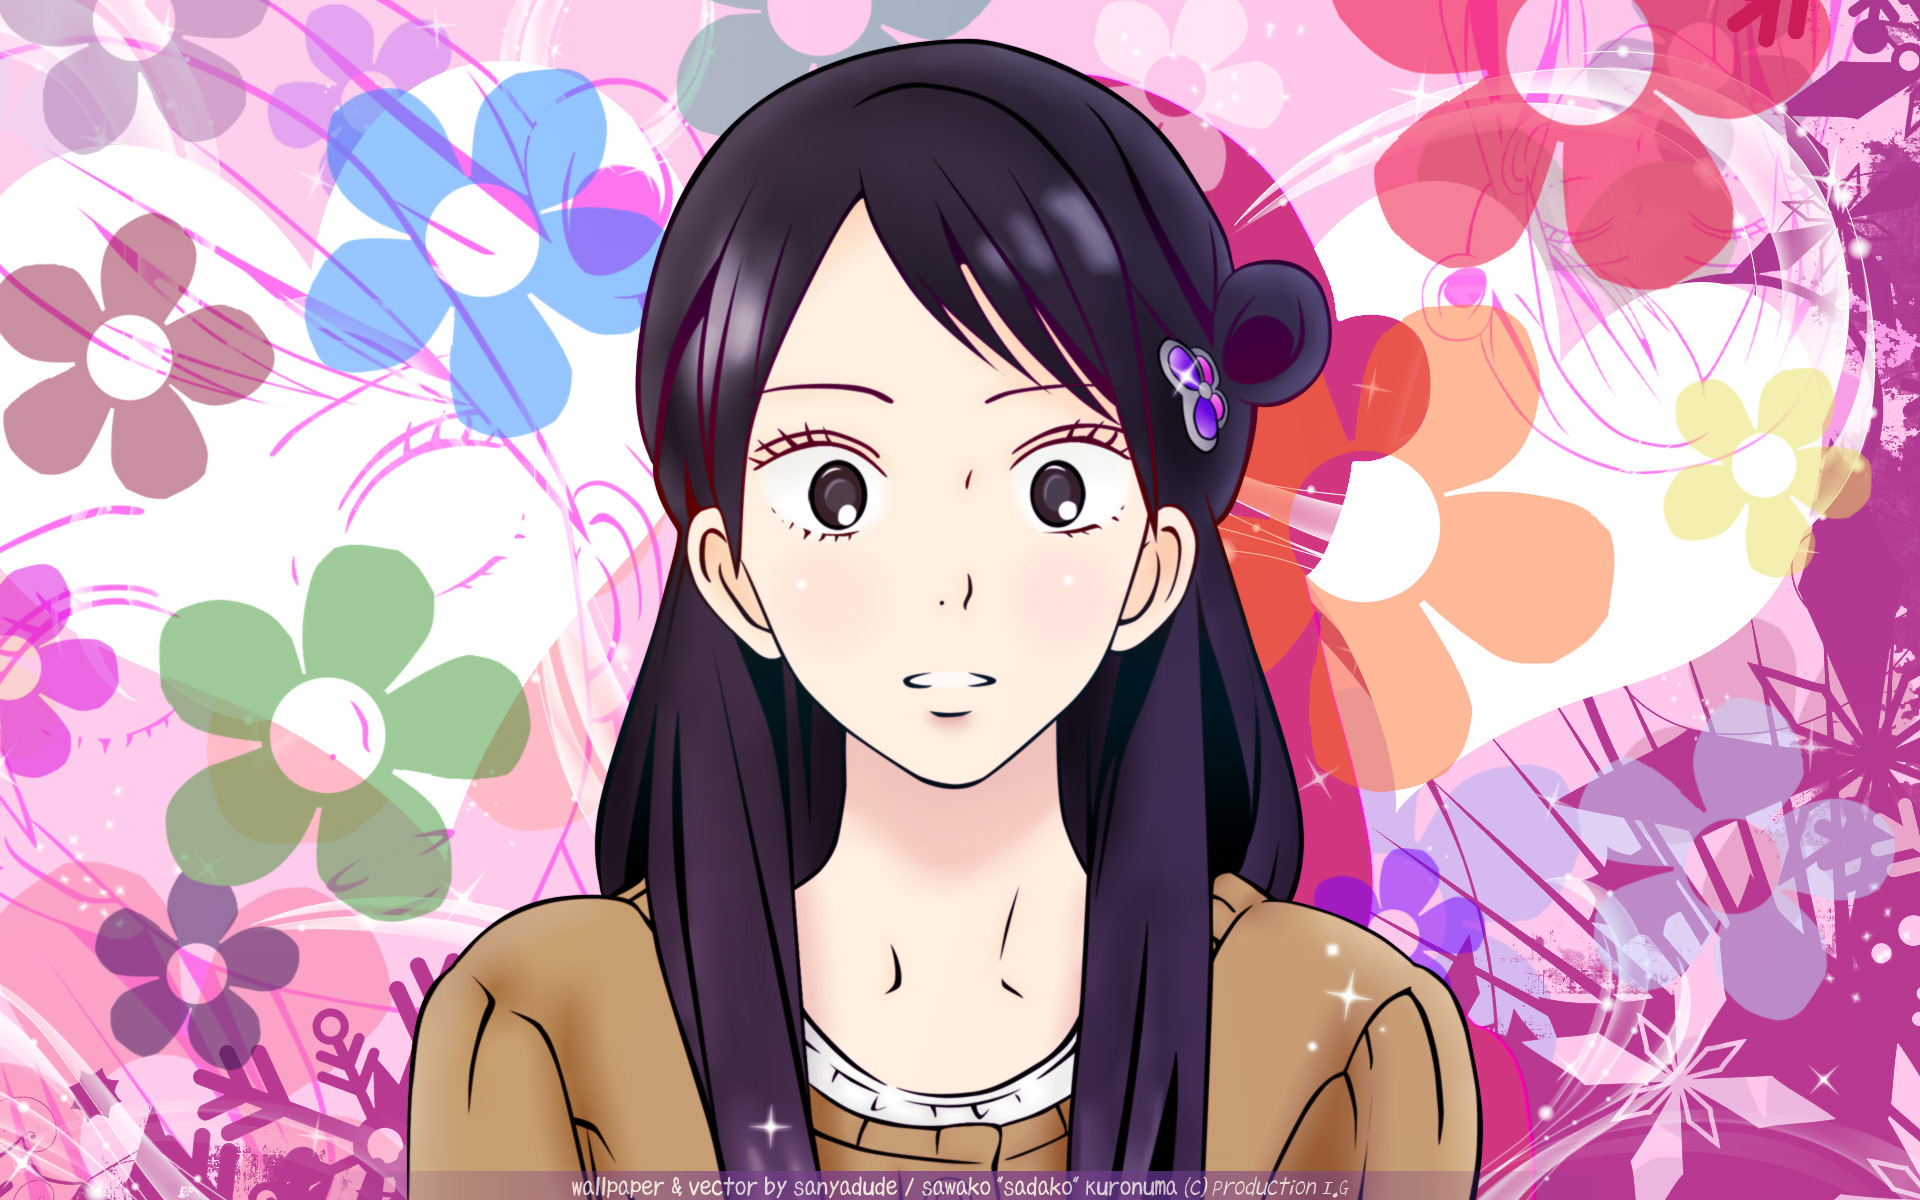 Sawako Kuronuma, main character from the anime Kimi Ni Todoke, in a serene desktop wallpaper.